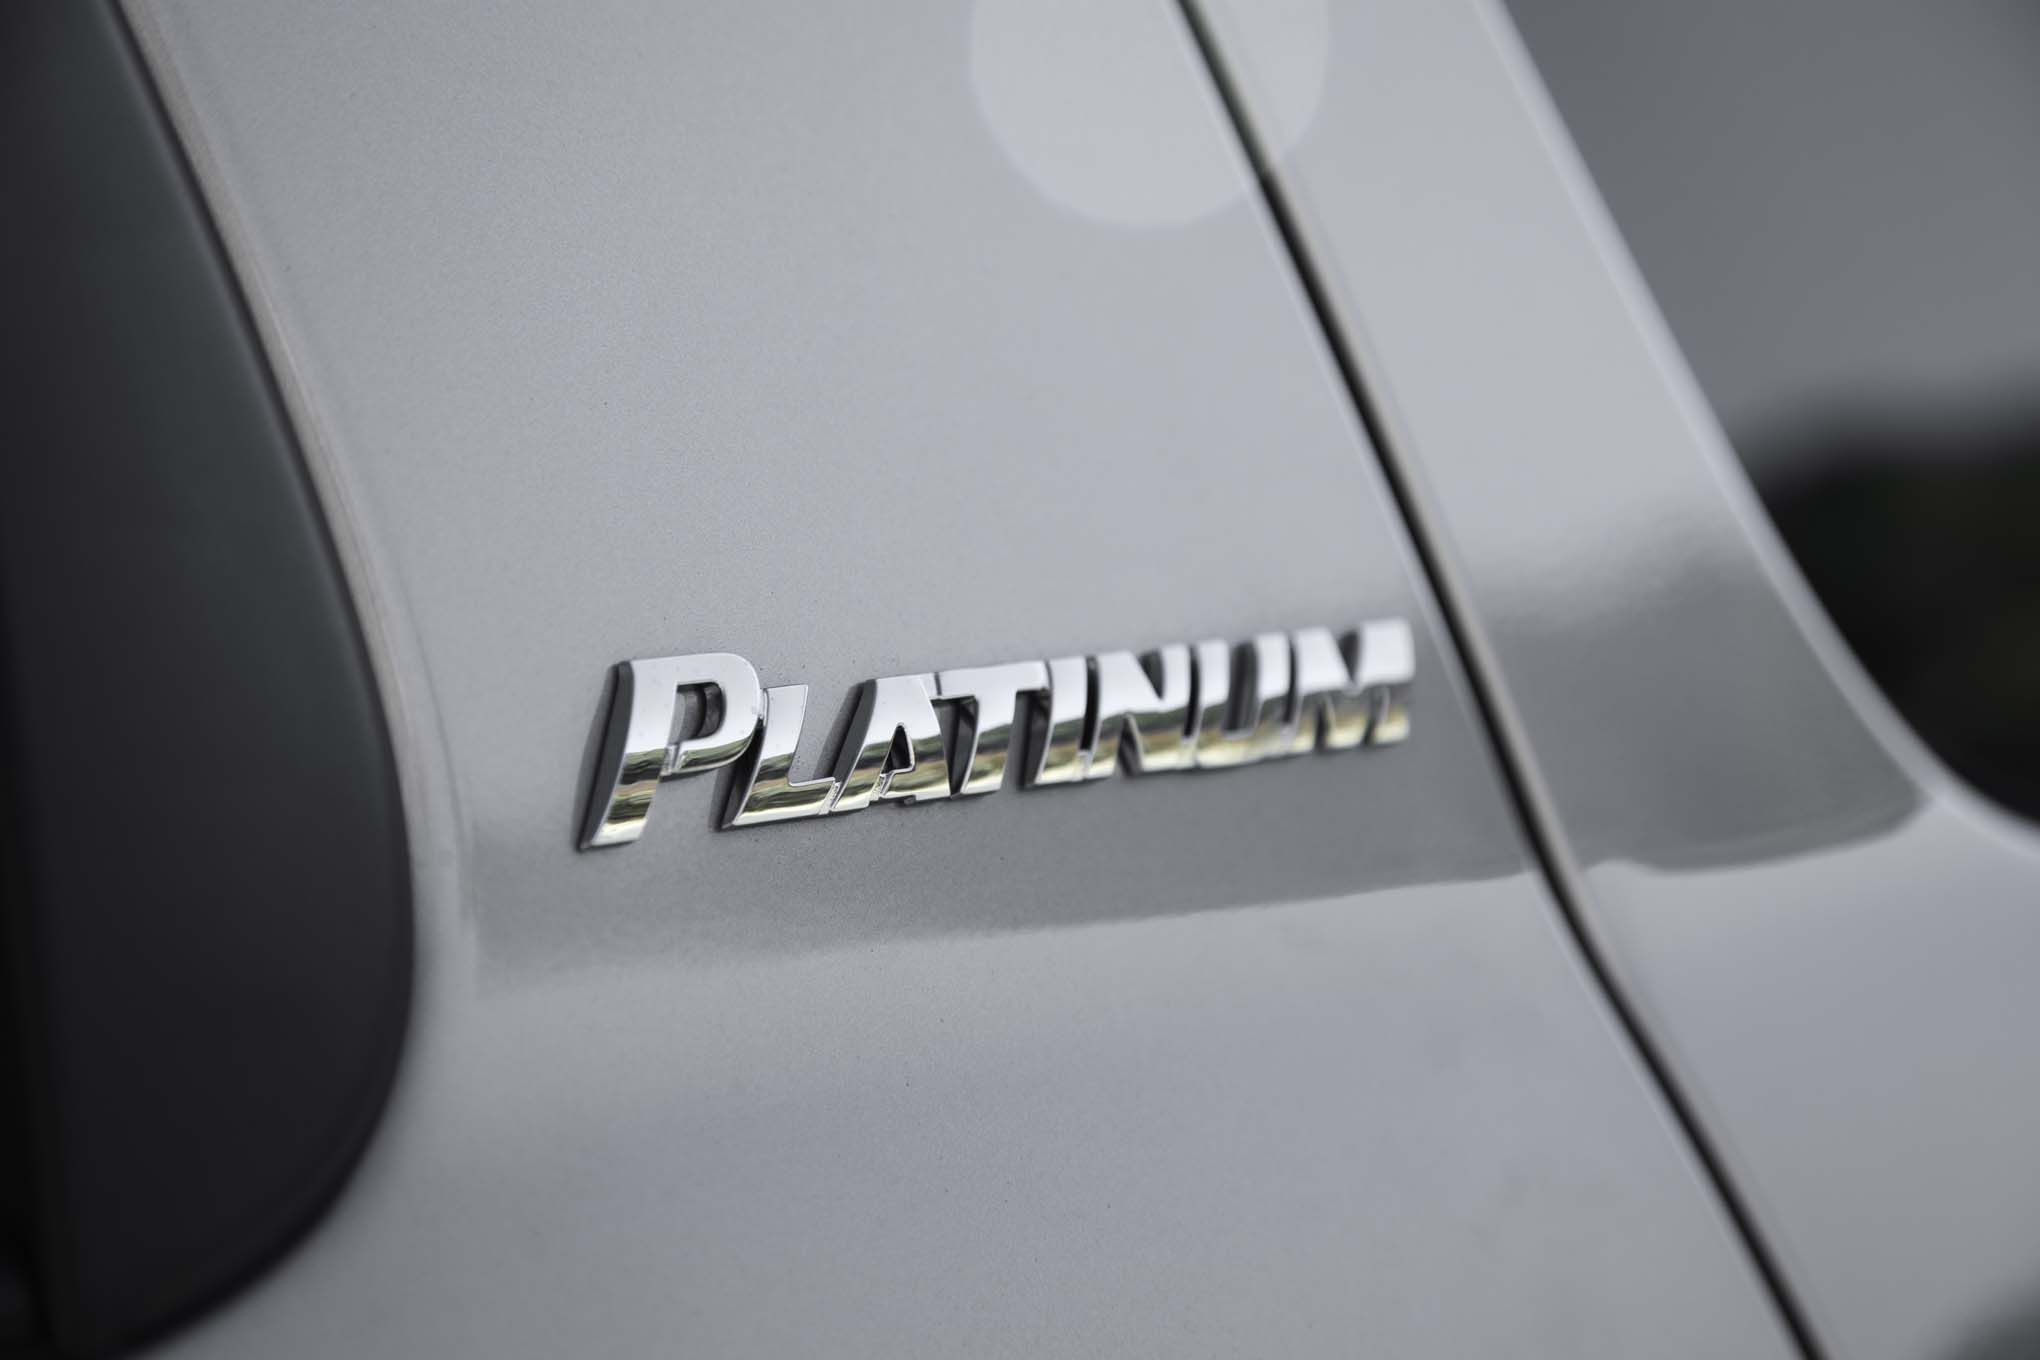 2017 Toyota Sequoia 4×4 Platinum Exterior View Rear Emblem (View 12 of 26)